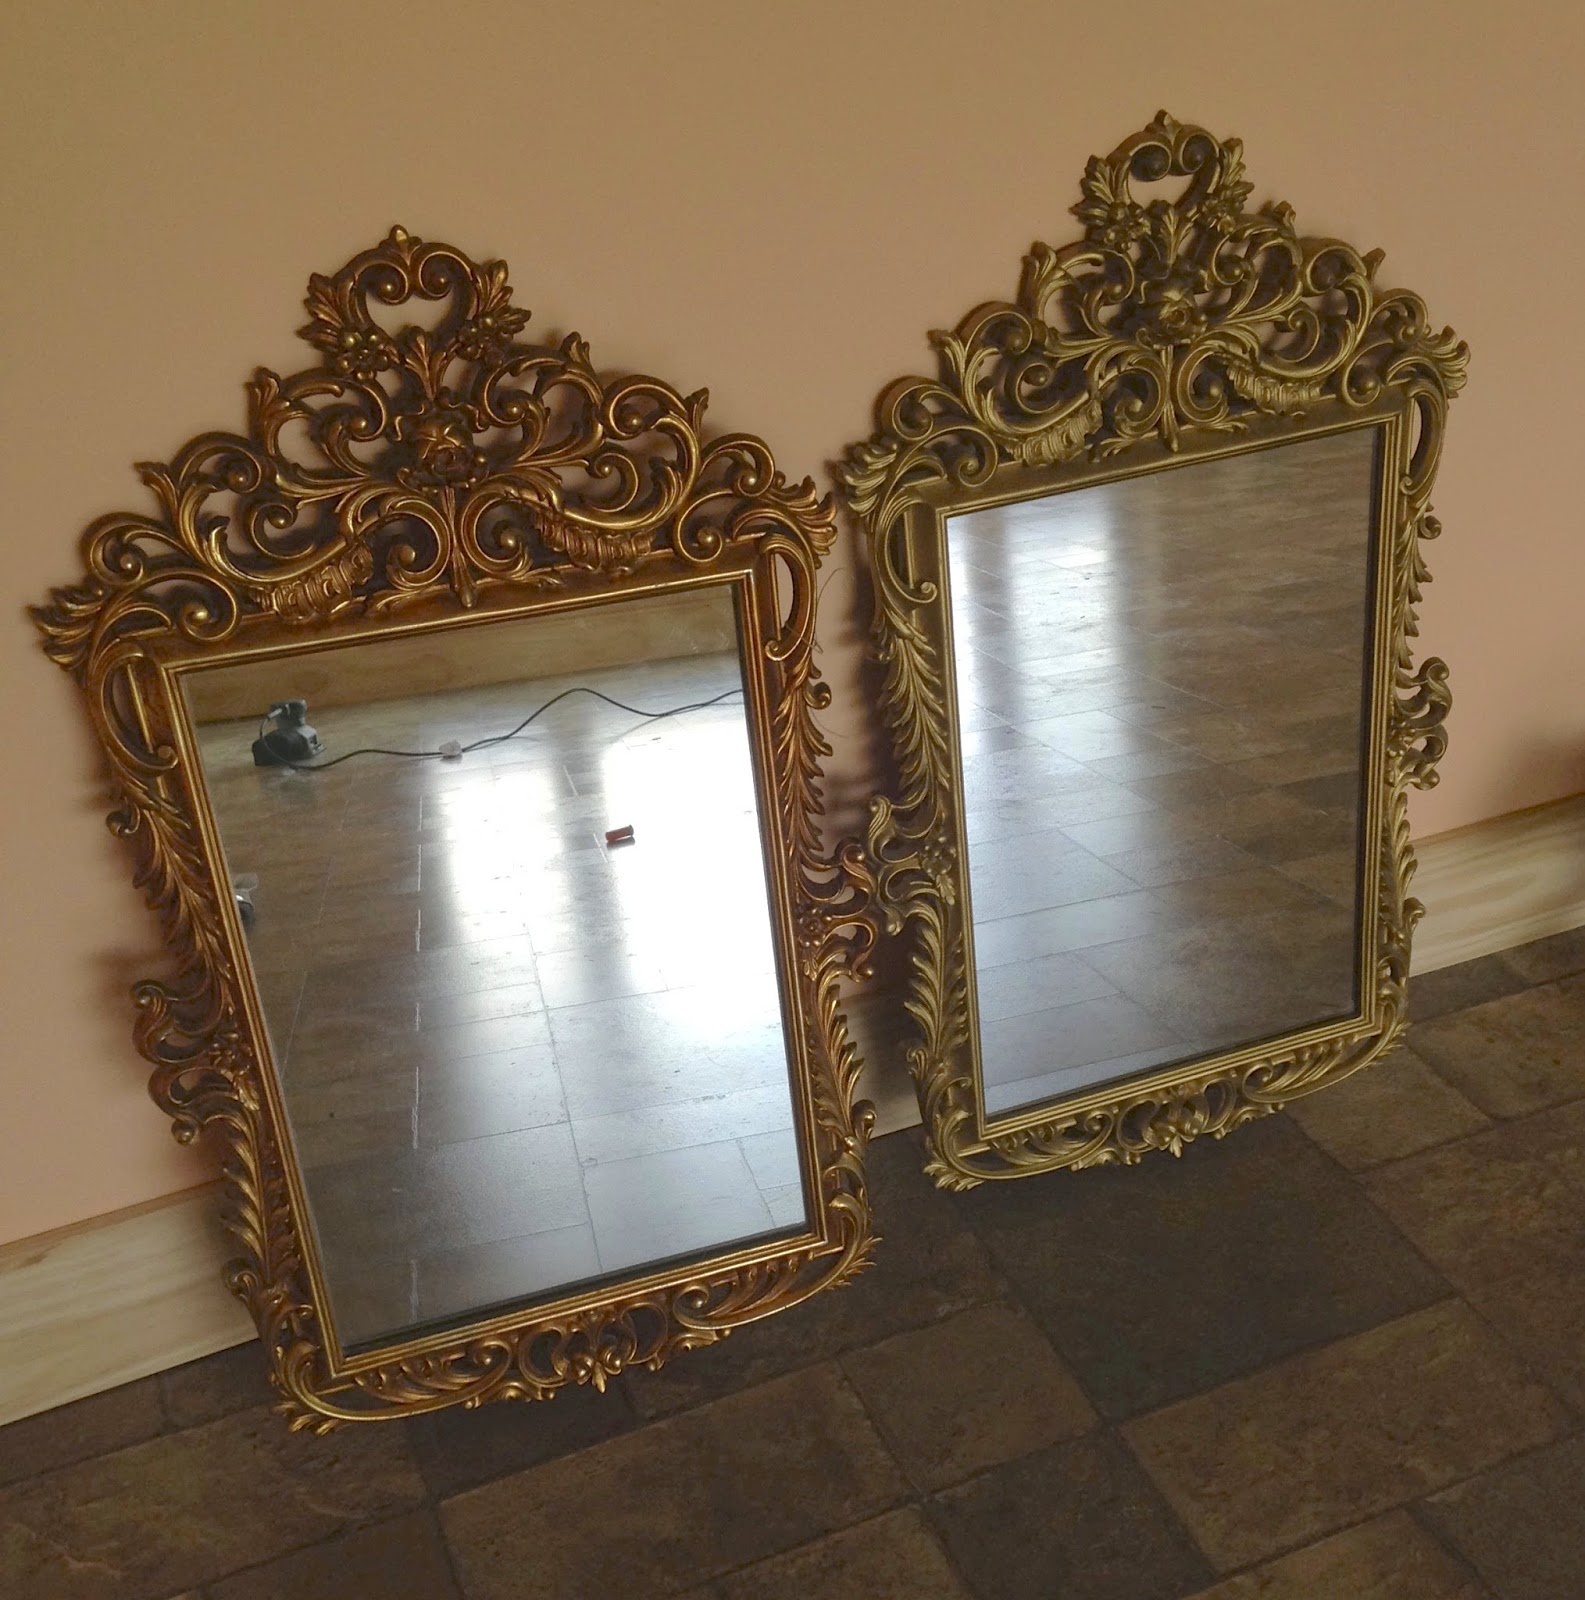 BK Monet: My DIY Shabby Chic Mirror Project